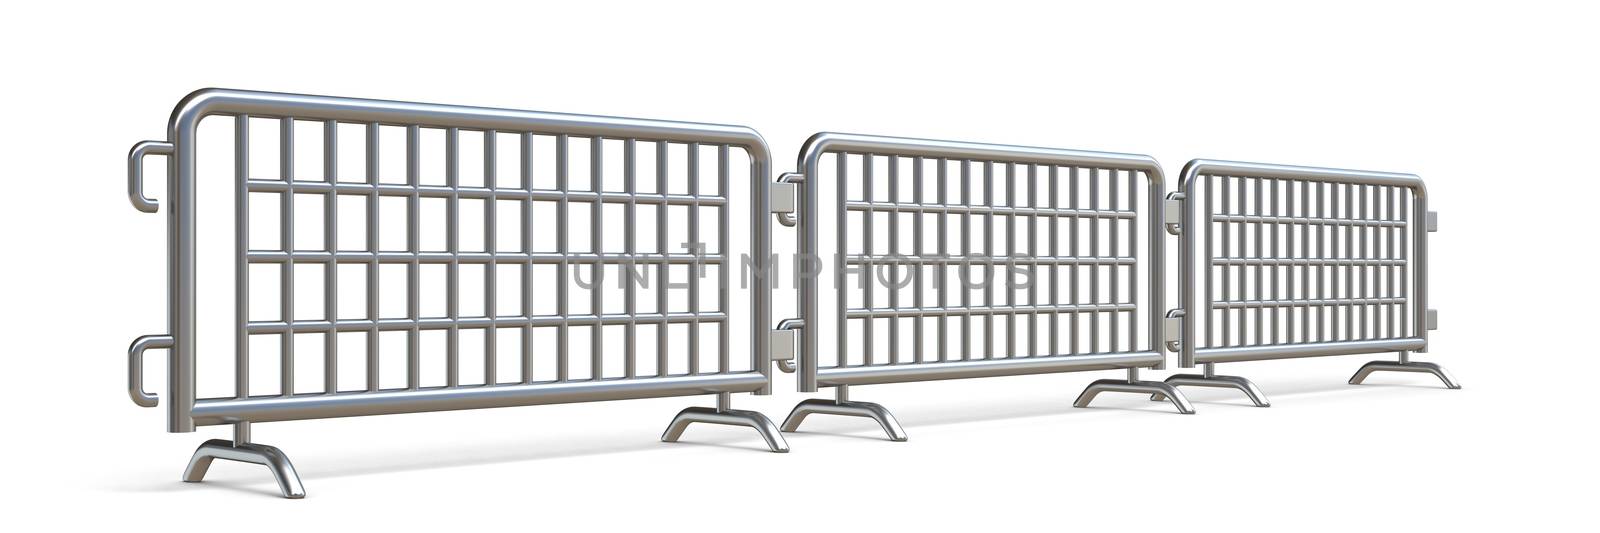 Steel barricades Side view 3D by djmilic